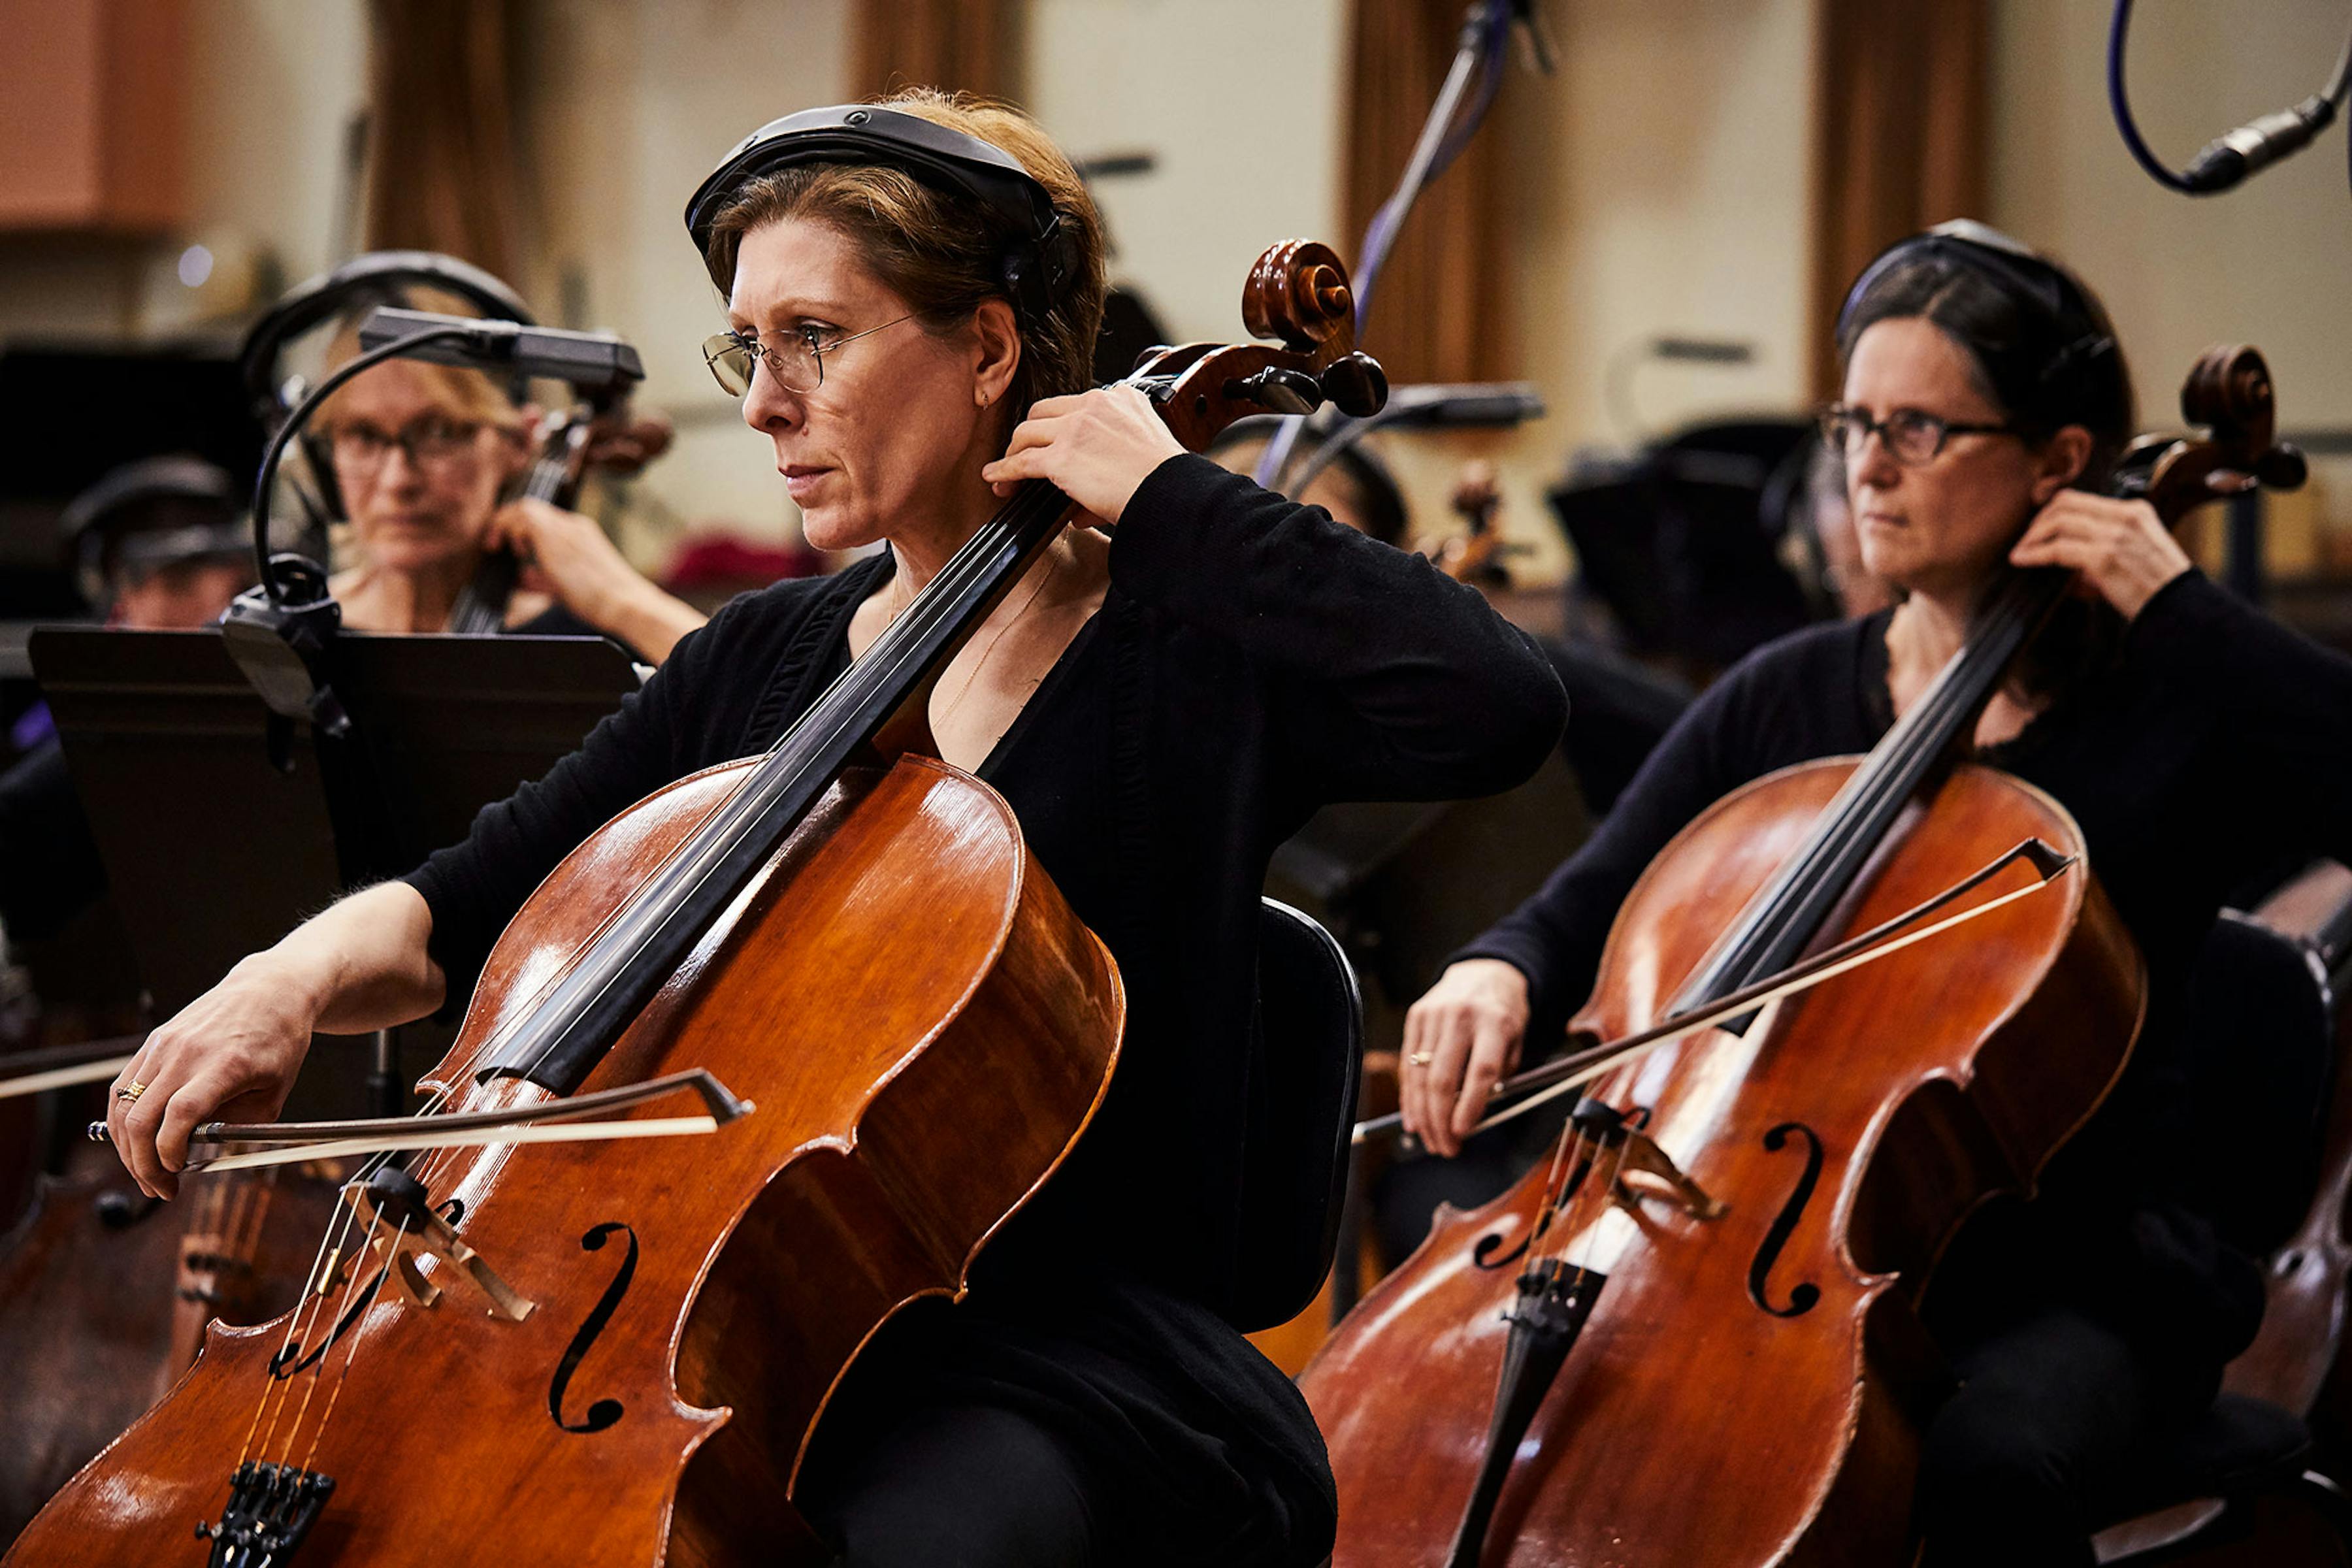 BBCSO Pro cello section